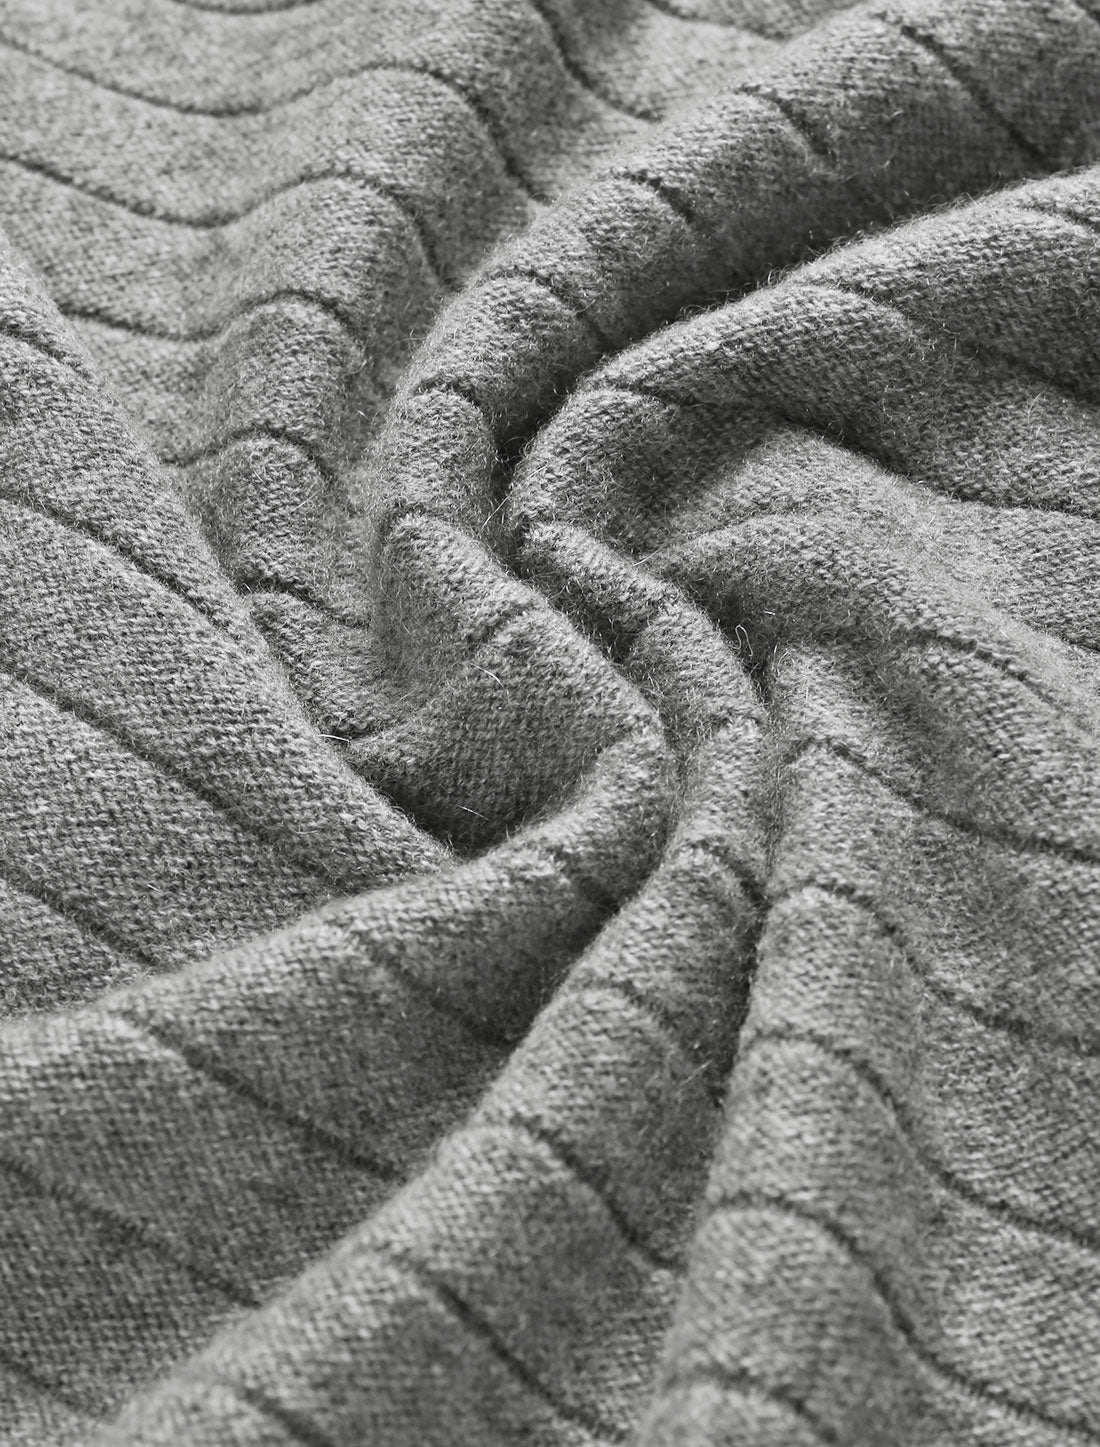 Bublédon 100% Cashmere Jersey Contrast Rib Knit Boat Neck Sweater